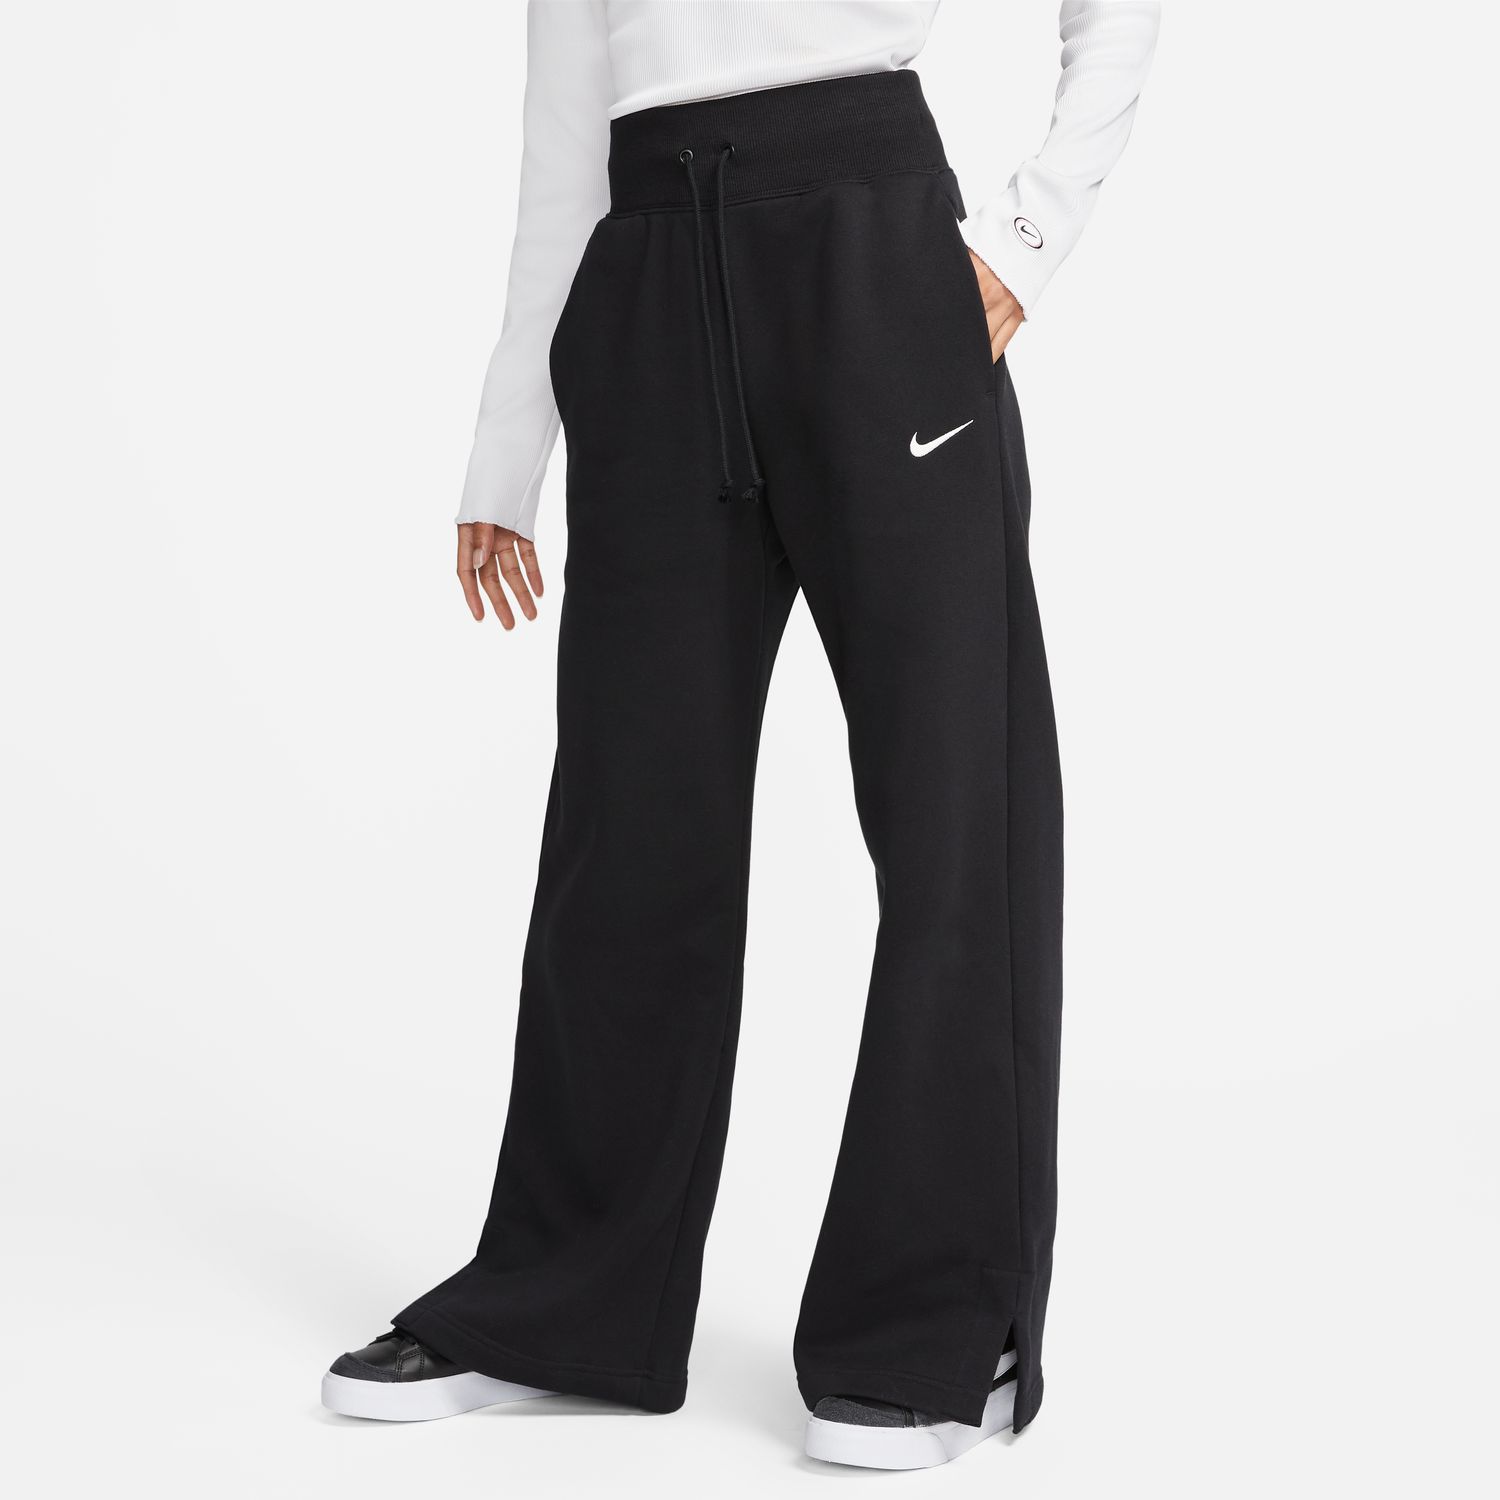 Nike Sportswear Phoenix Fleece Wmns Pants Black - Dámske - Nohavice Nike - Čierne - DQ5615-010 - Veľkosť: L